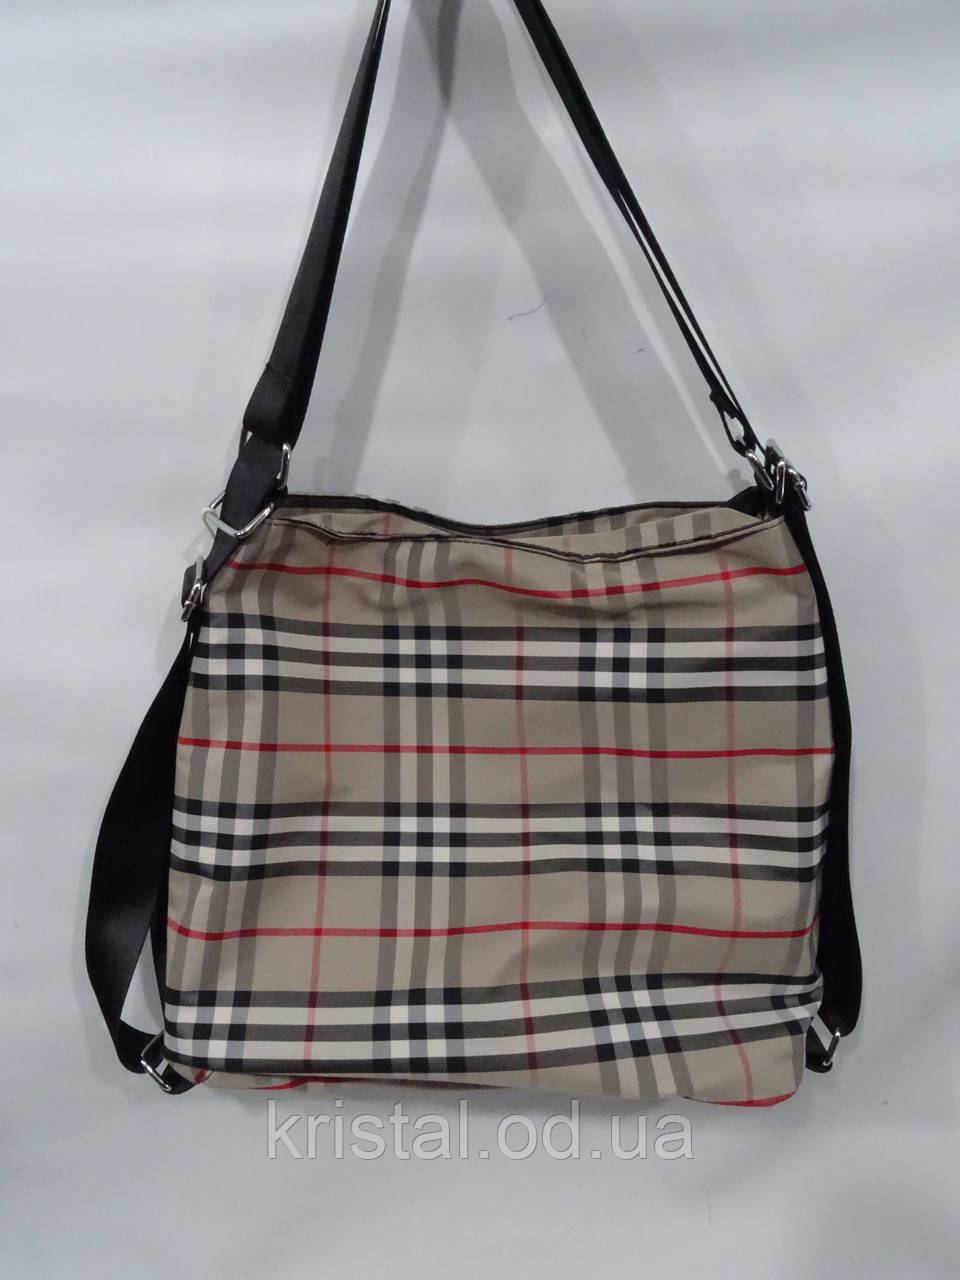 Жіноча сумка-шопер гуртом 35*34 см. серії "Міраж" No17629